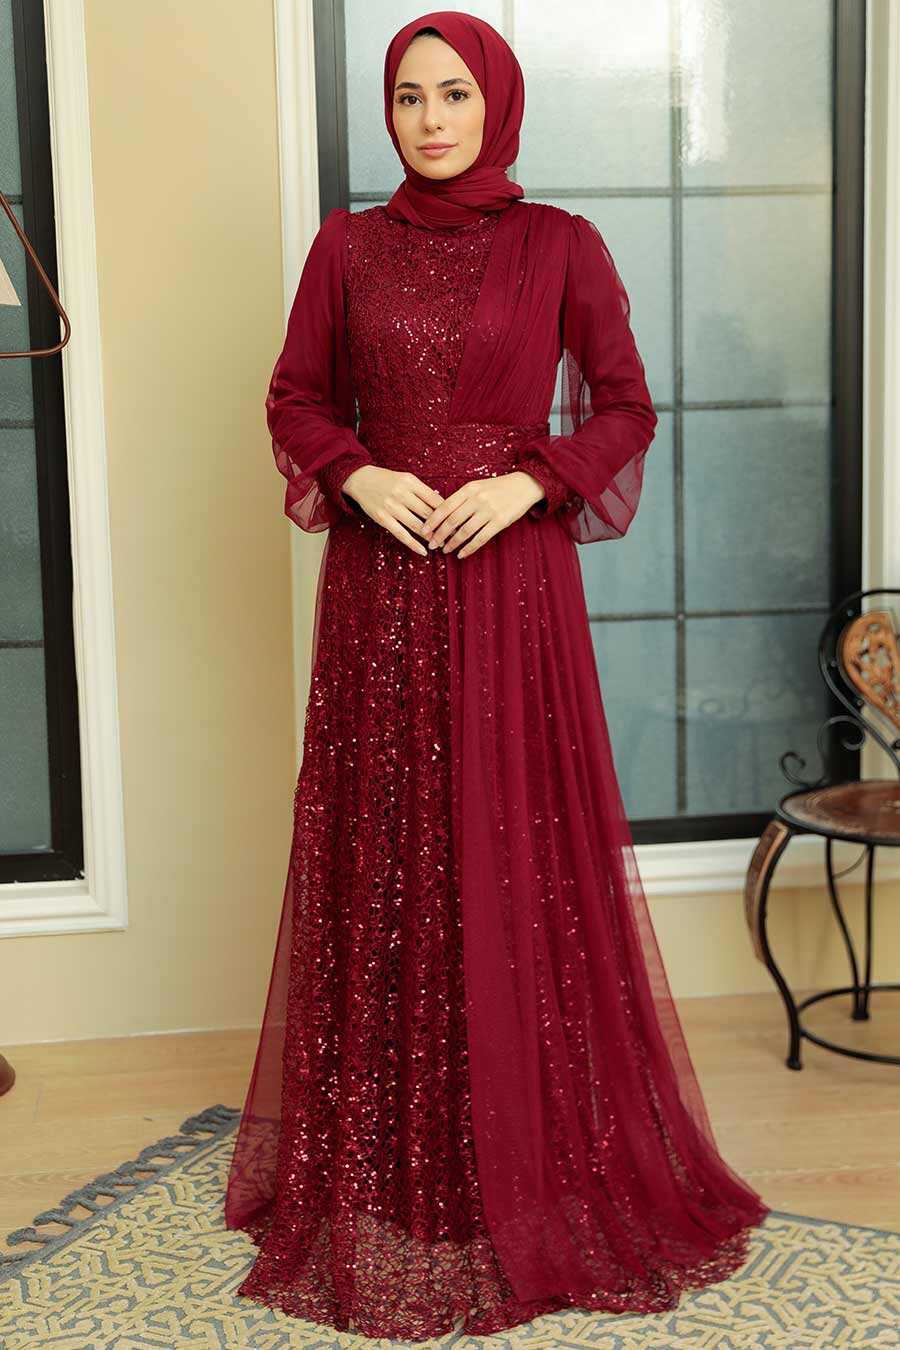 Claret Red Hijab Evening Dress 5696BR